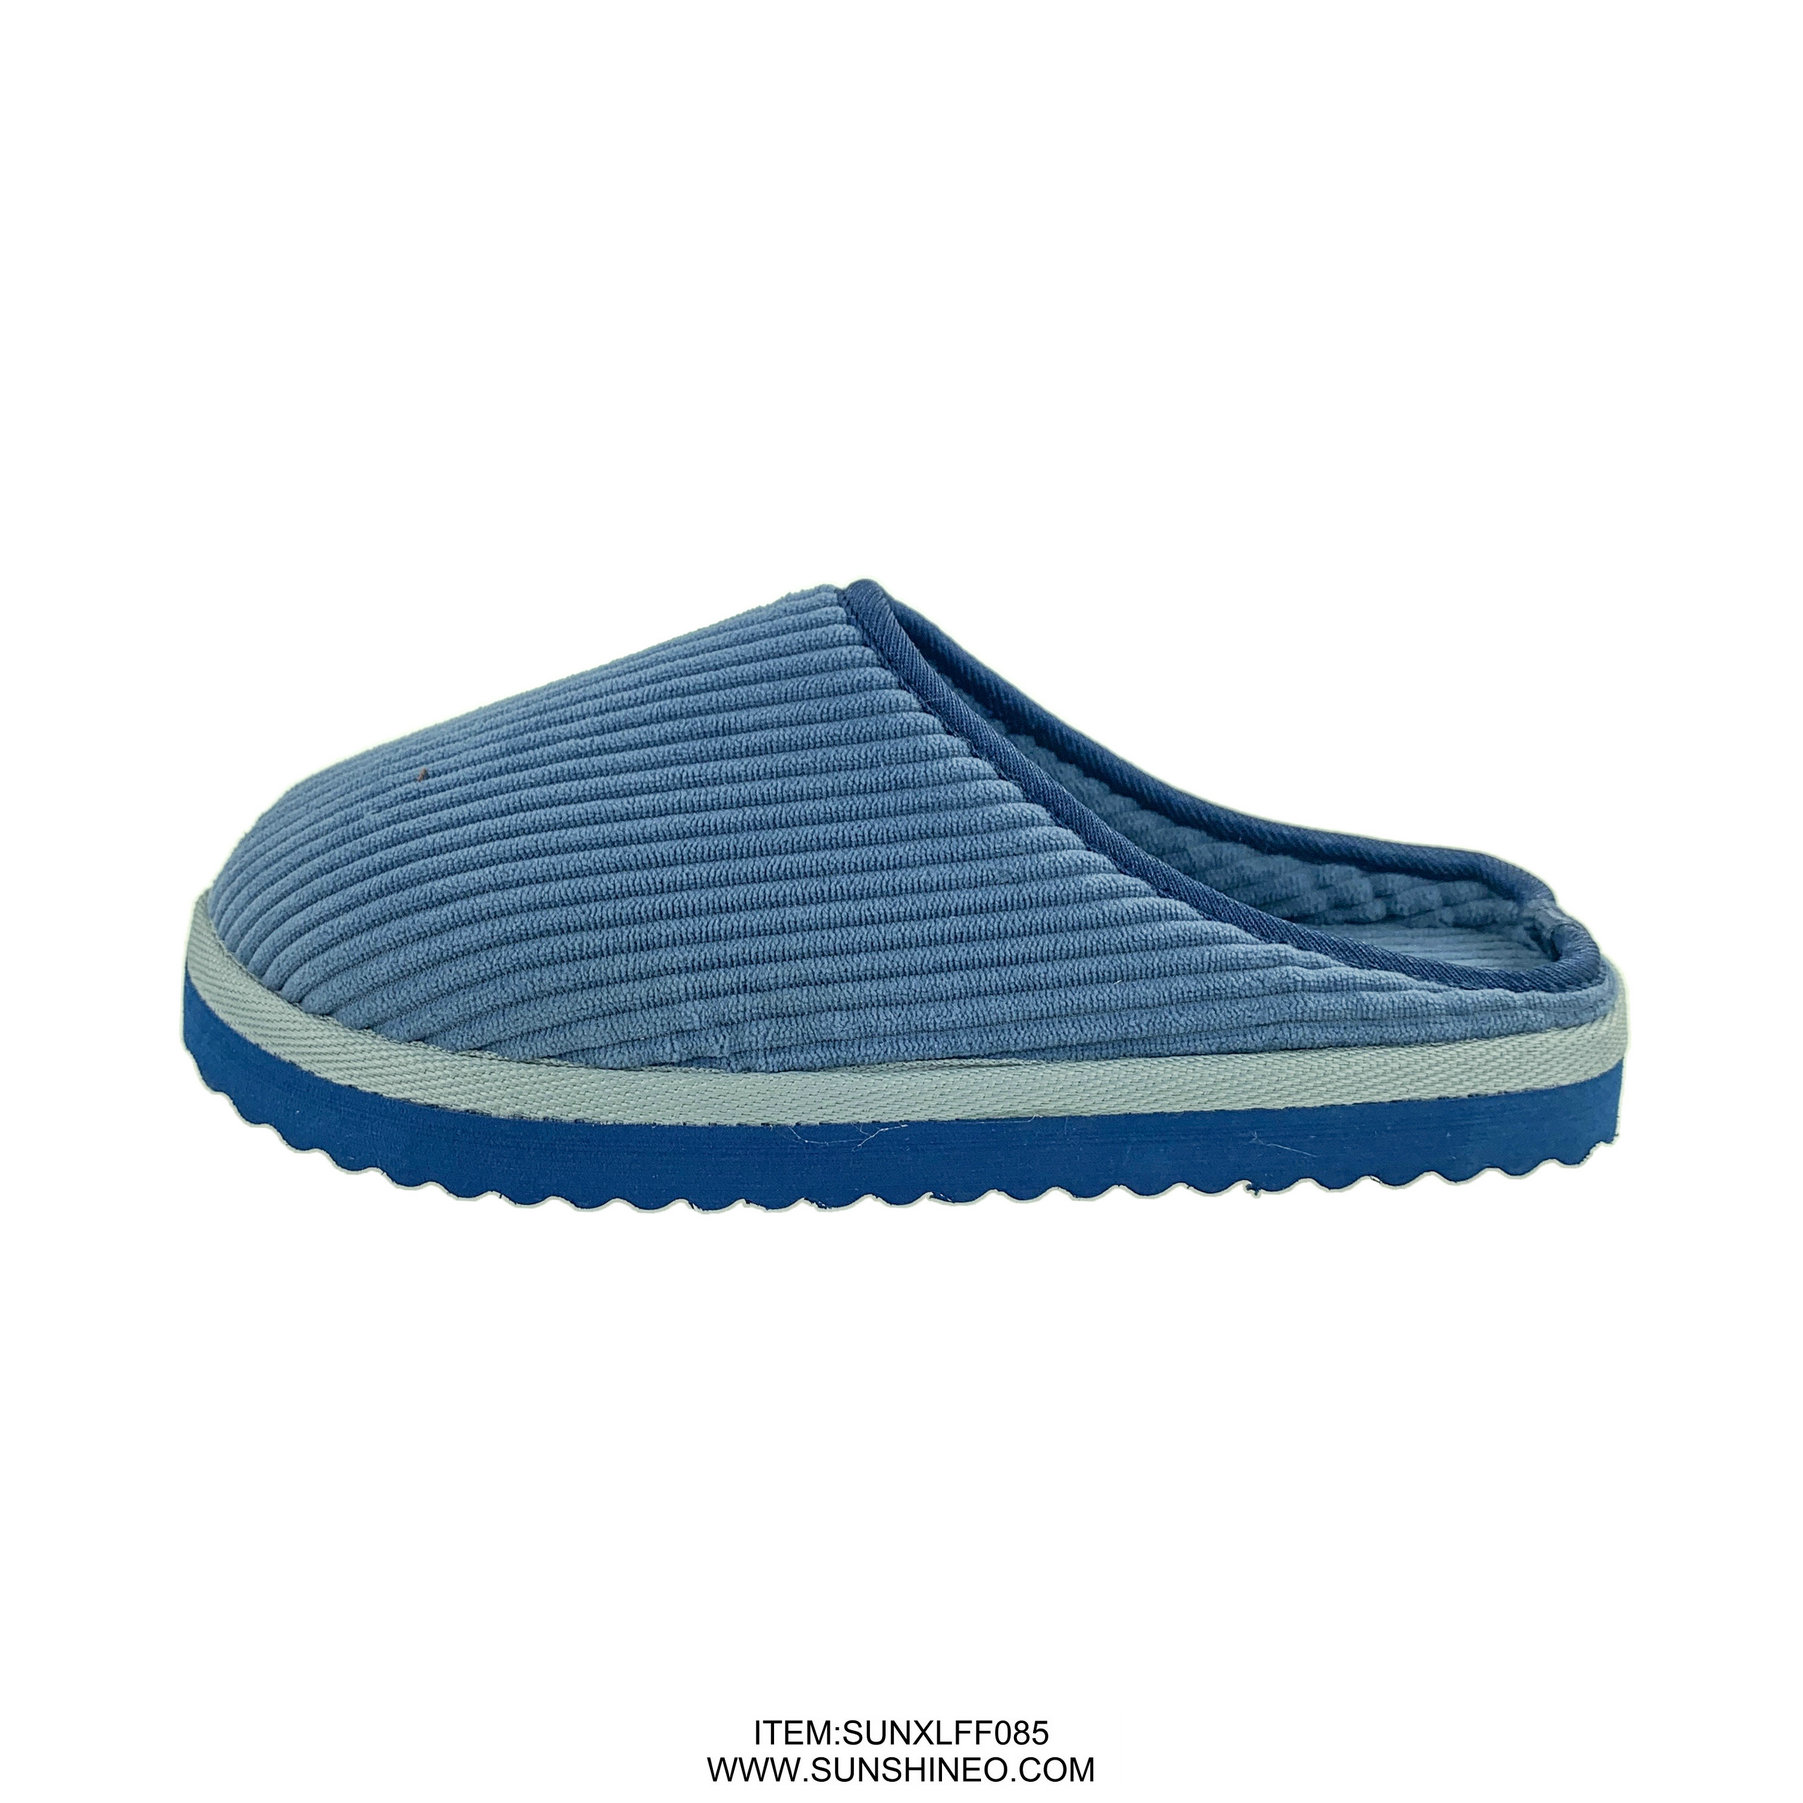 SUNXLFF085 fur flip flop sandals winter slippers